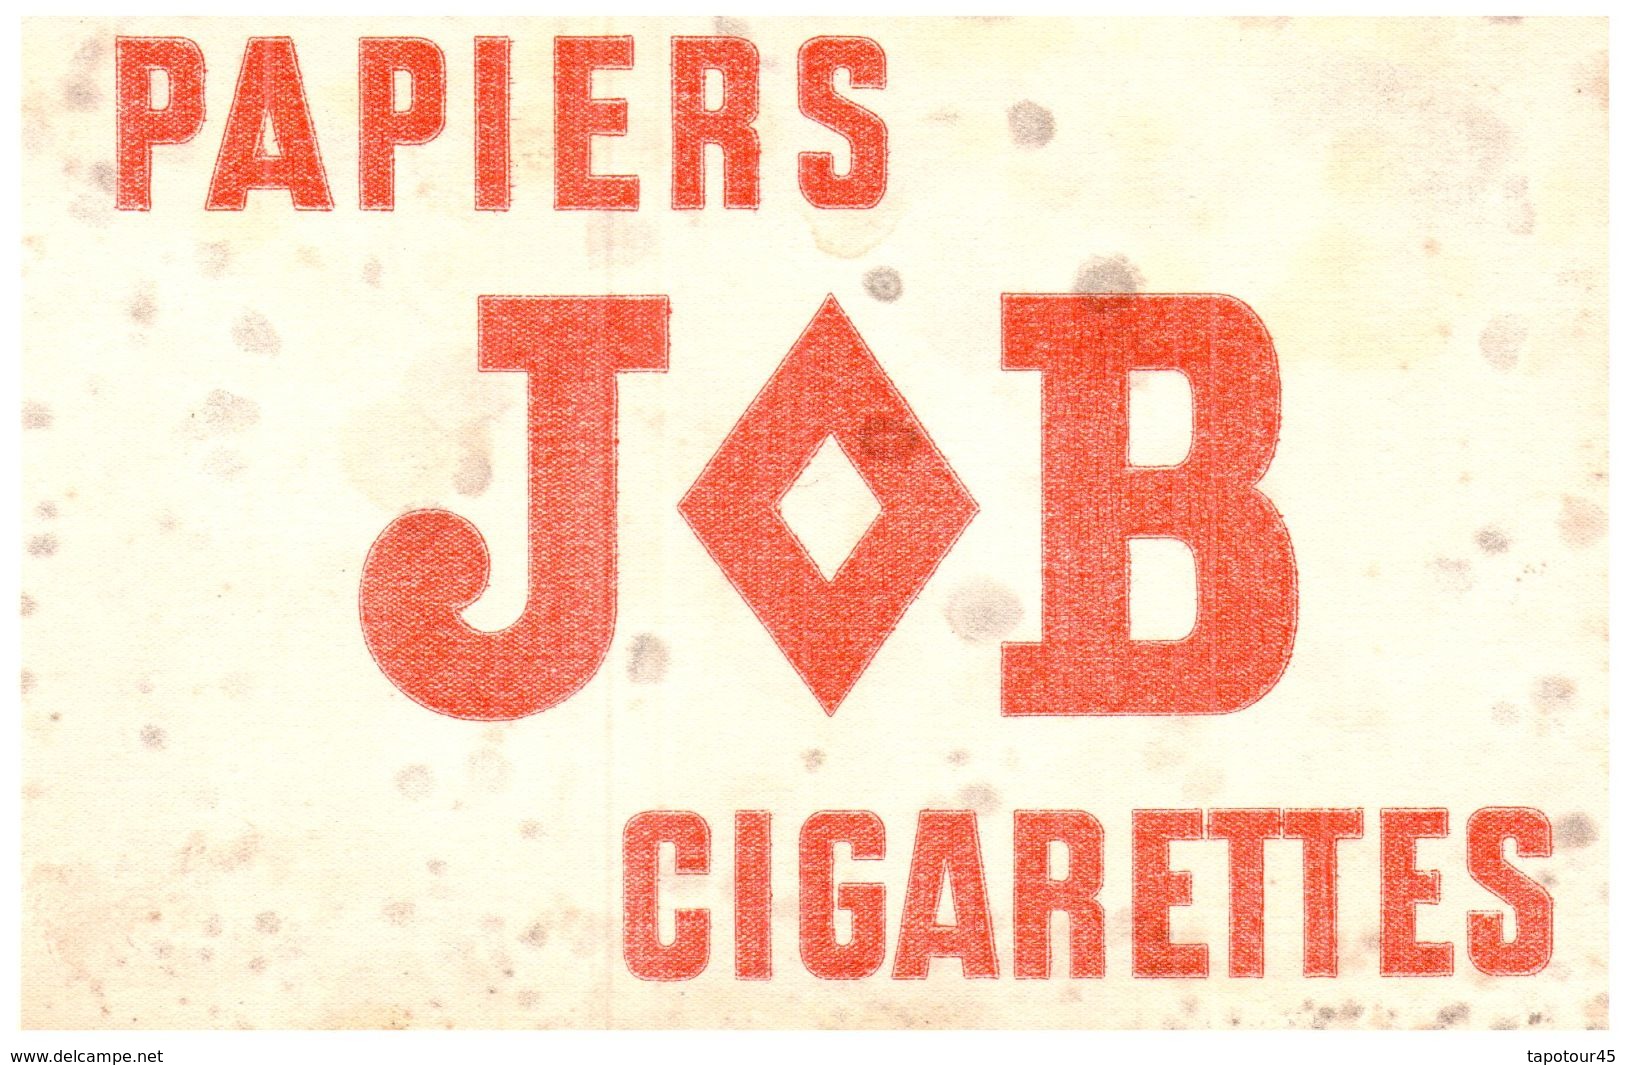 Pa J/ Buvard Papier A Cigarette JOB  (N= 1) - Tabak